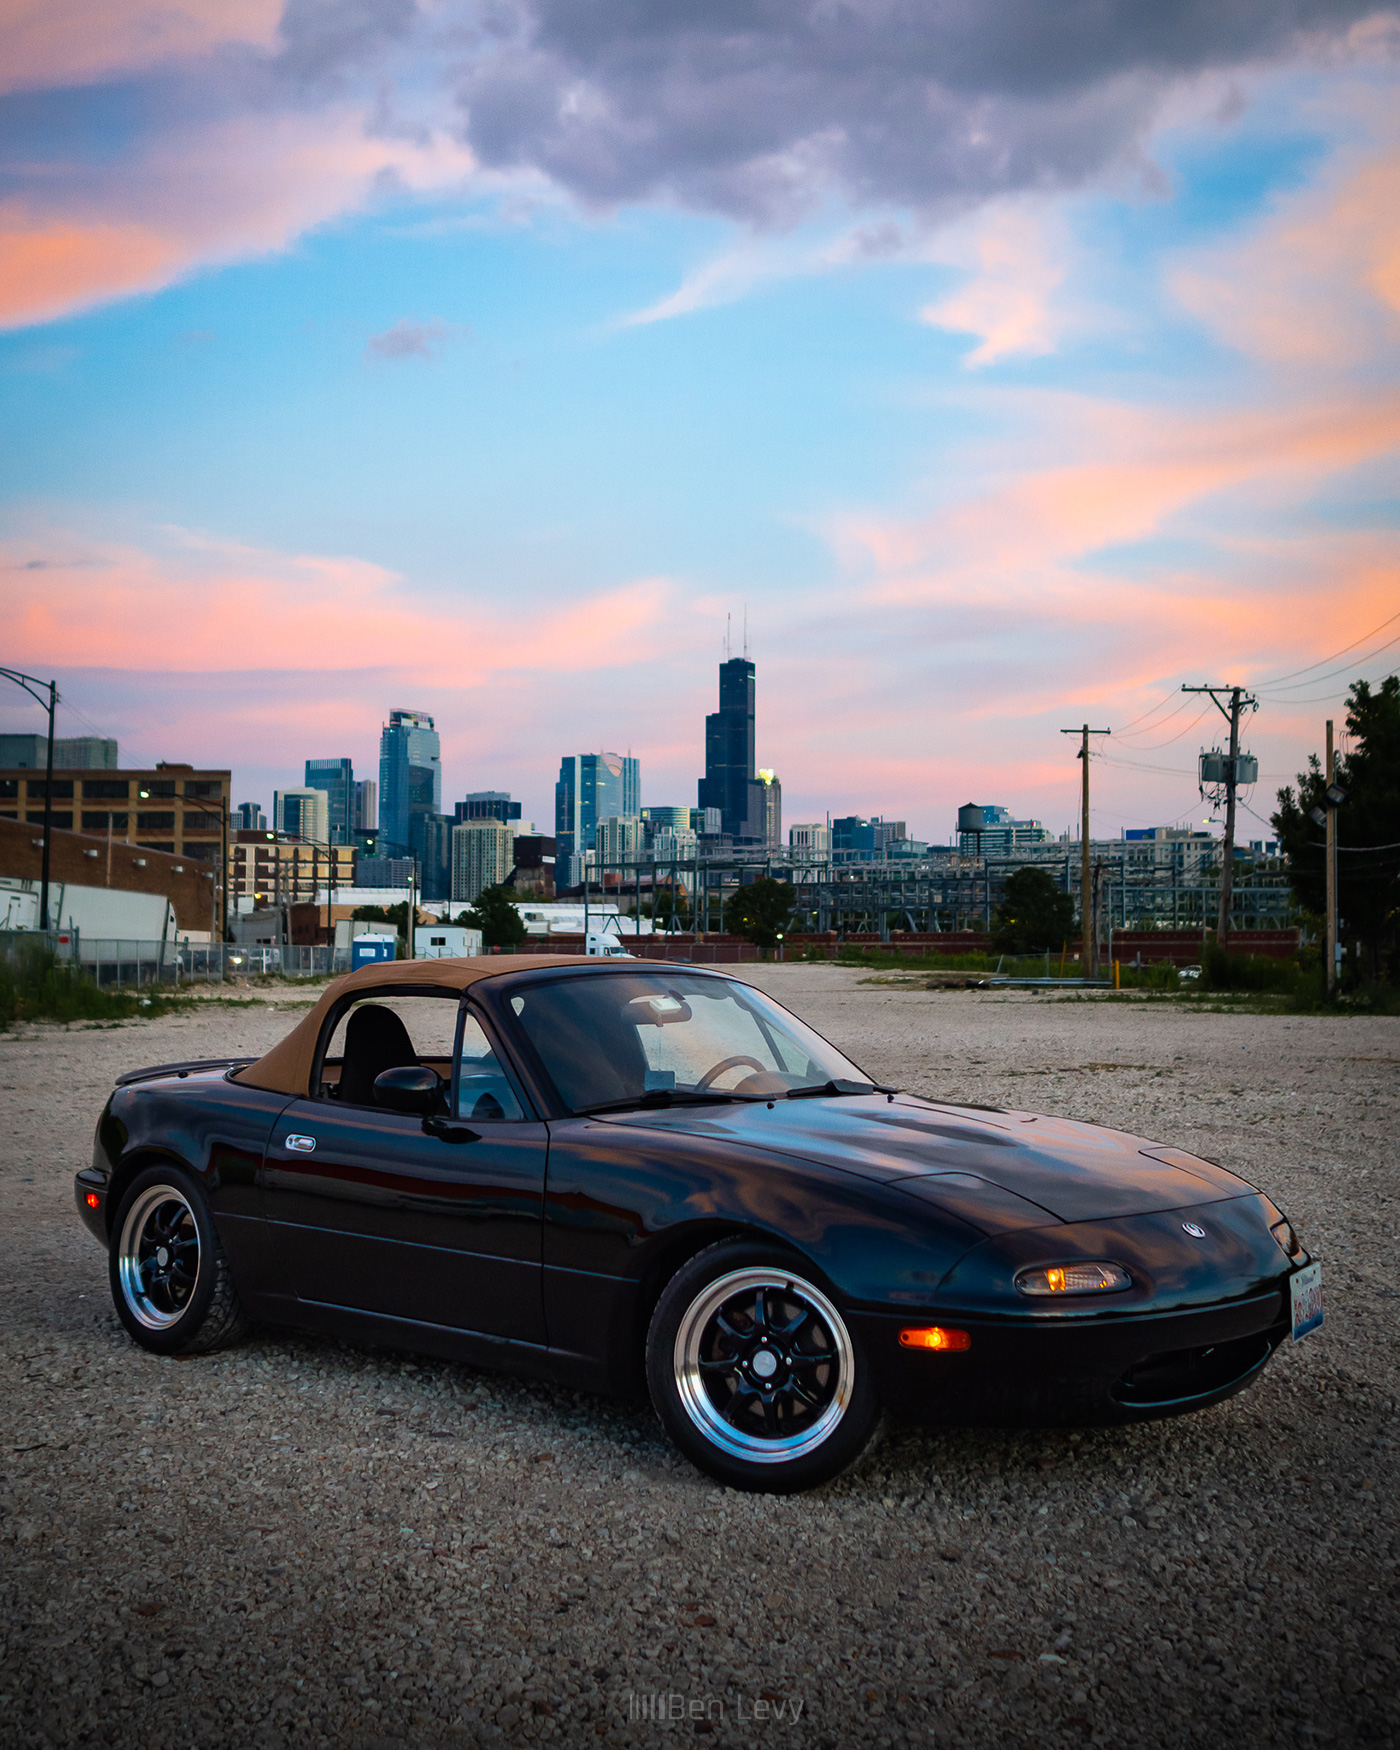 My Black Mazda Miata in front of the Chicago Skyline